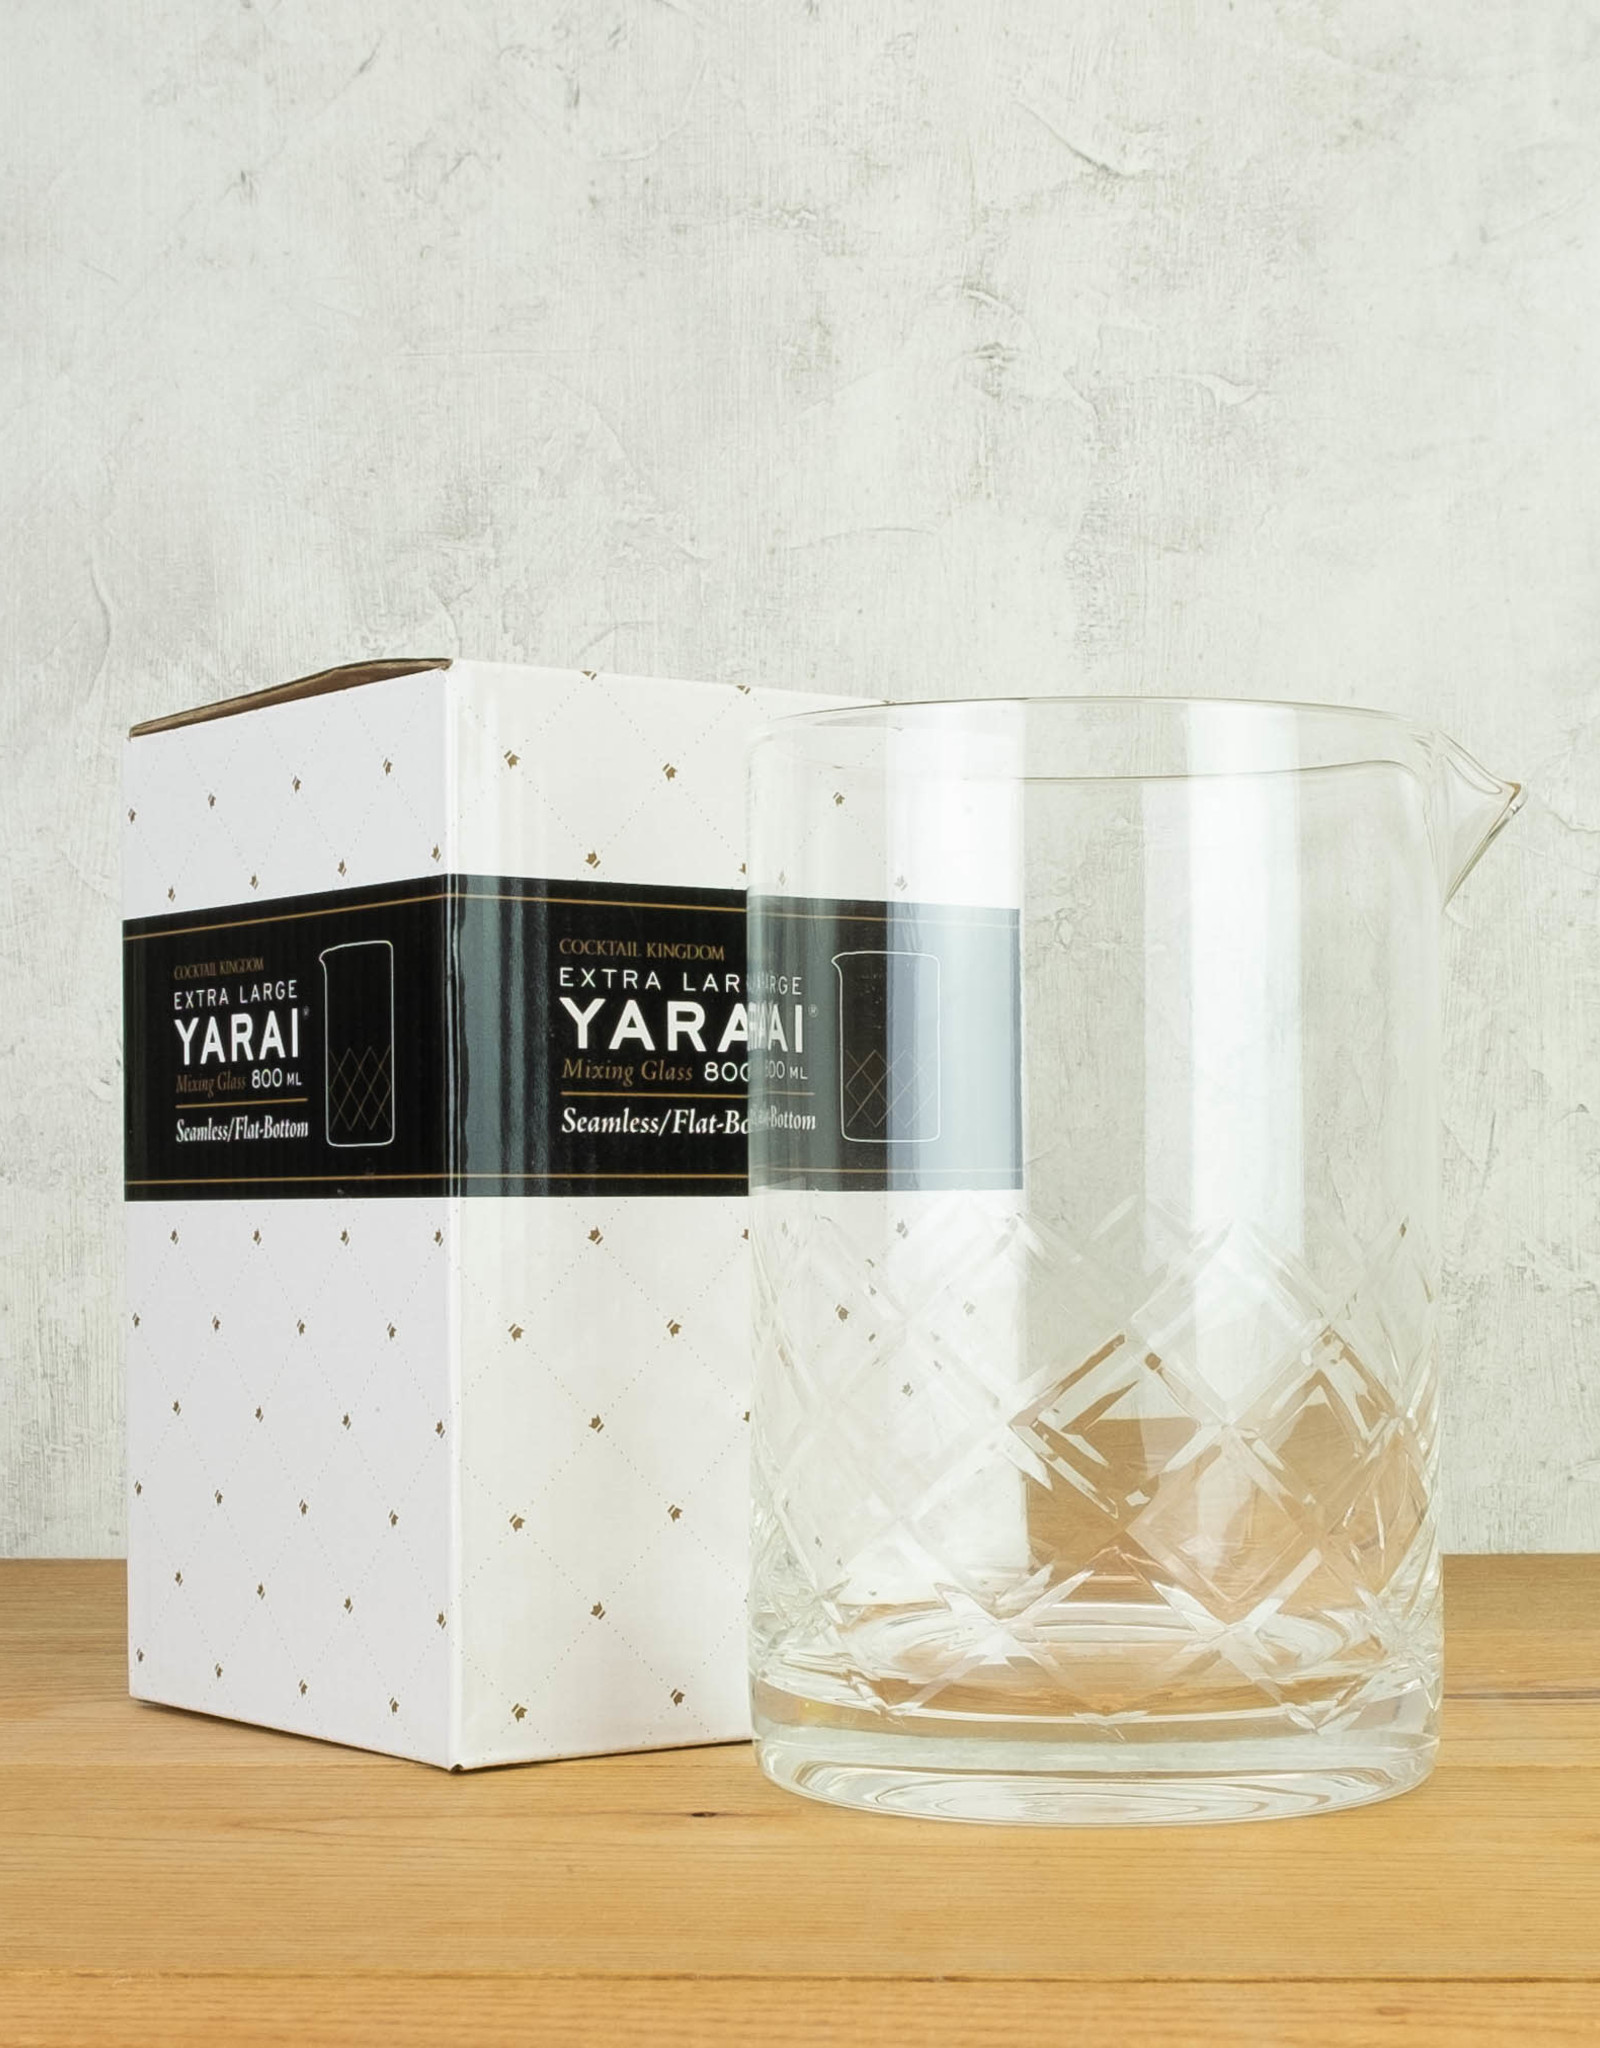 Cocktail Kingdom Yarai Mixing Glass 800ml